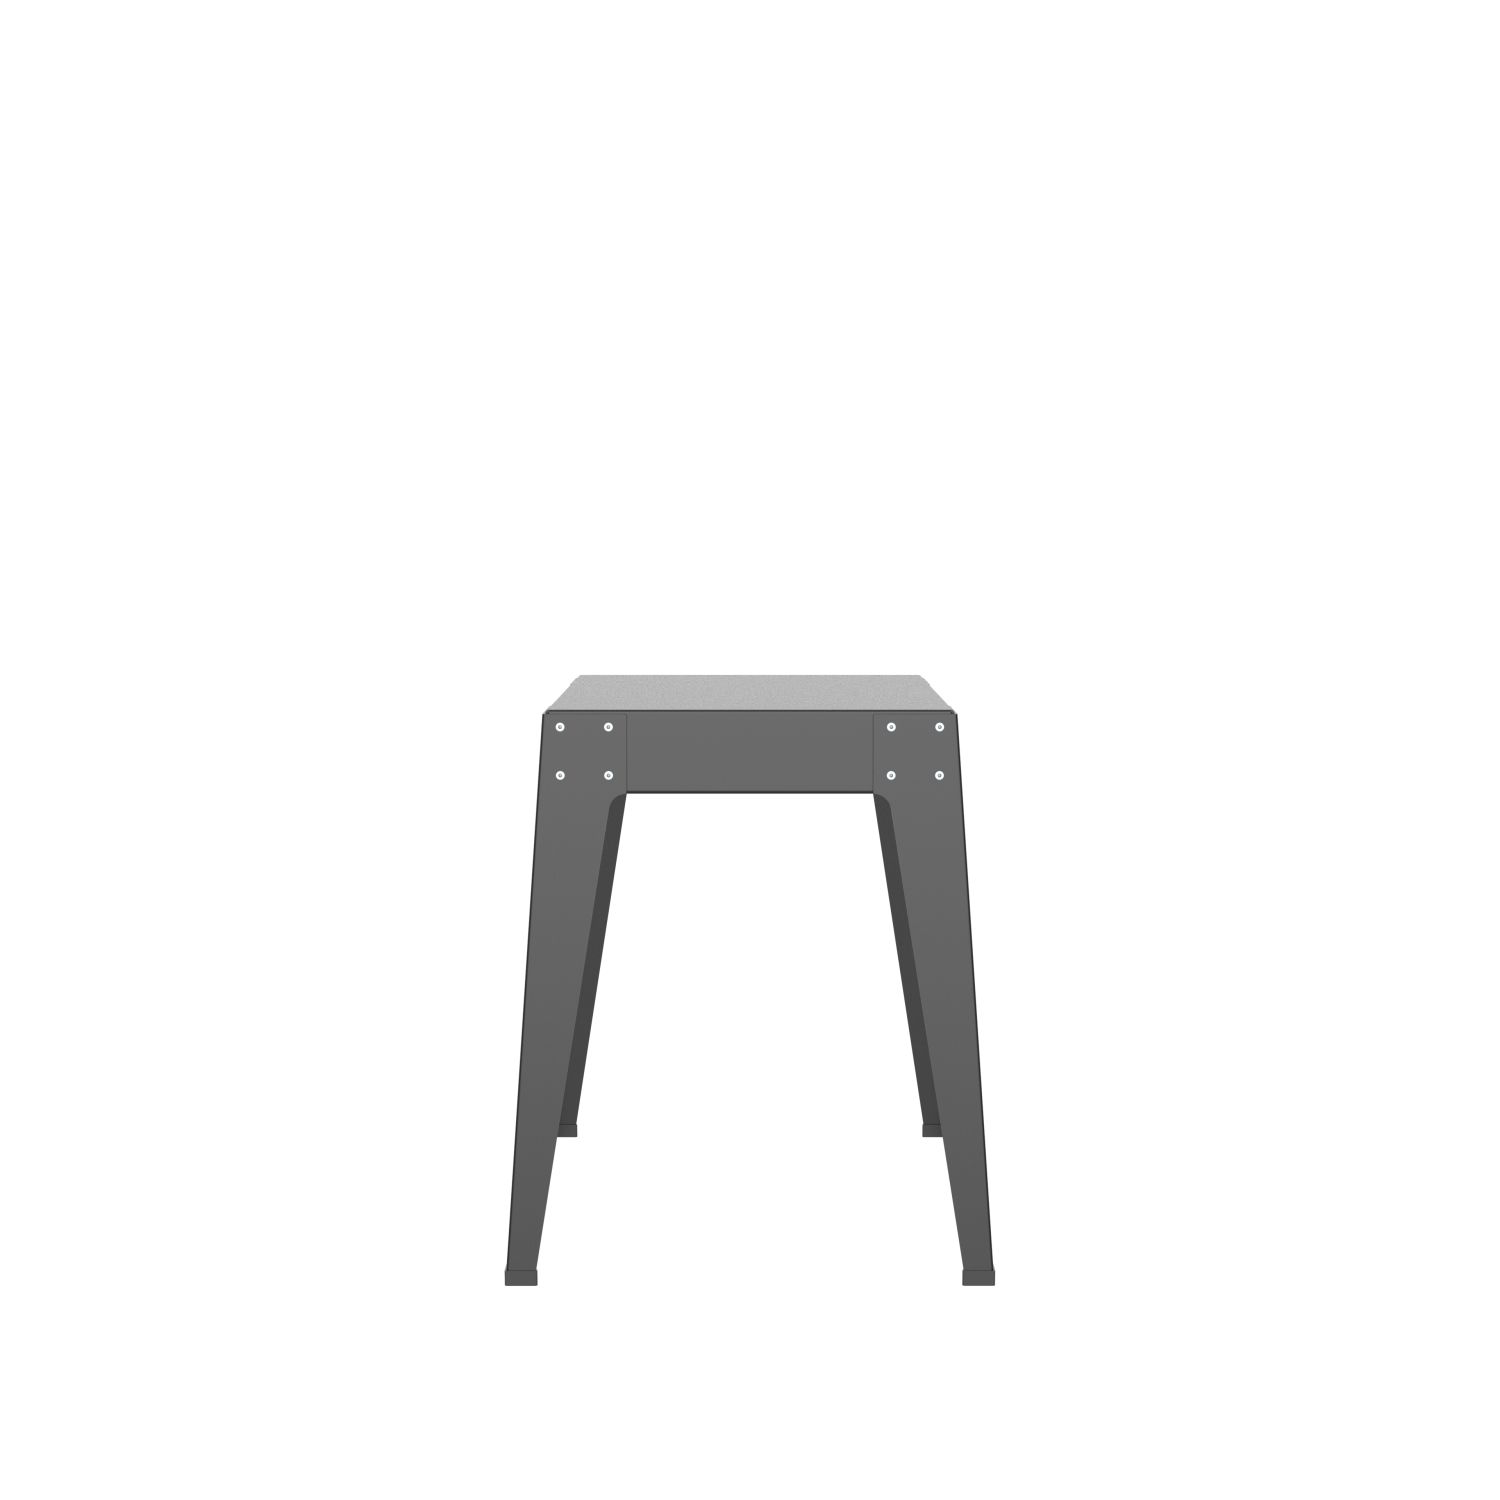 lensvelt piet hein eek aluminium series stool black ral9005 soft leg ends